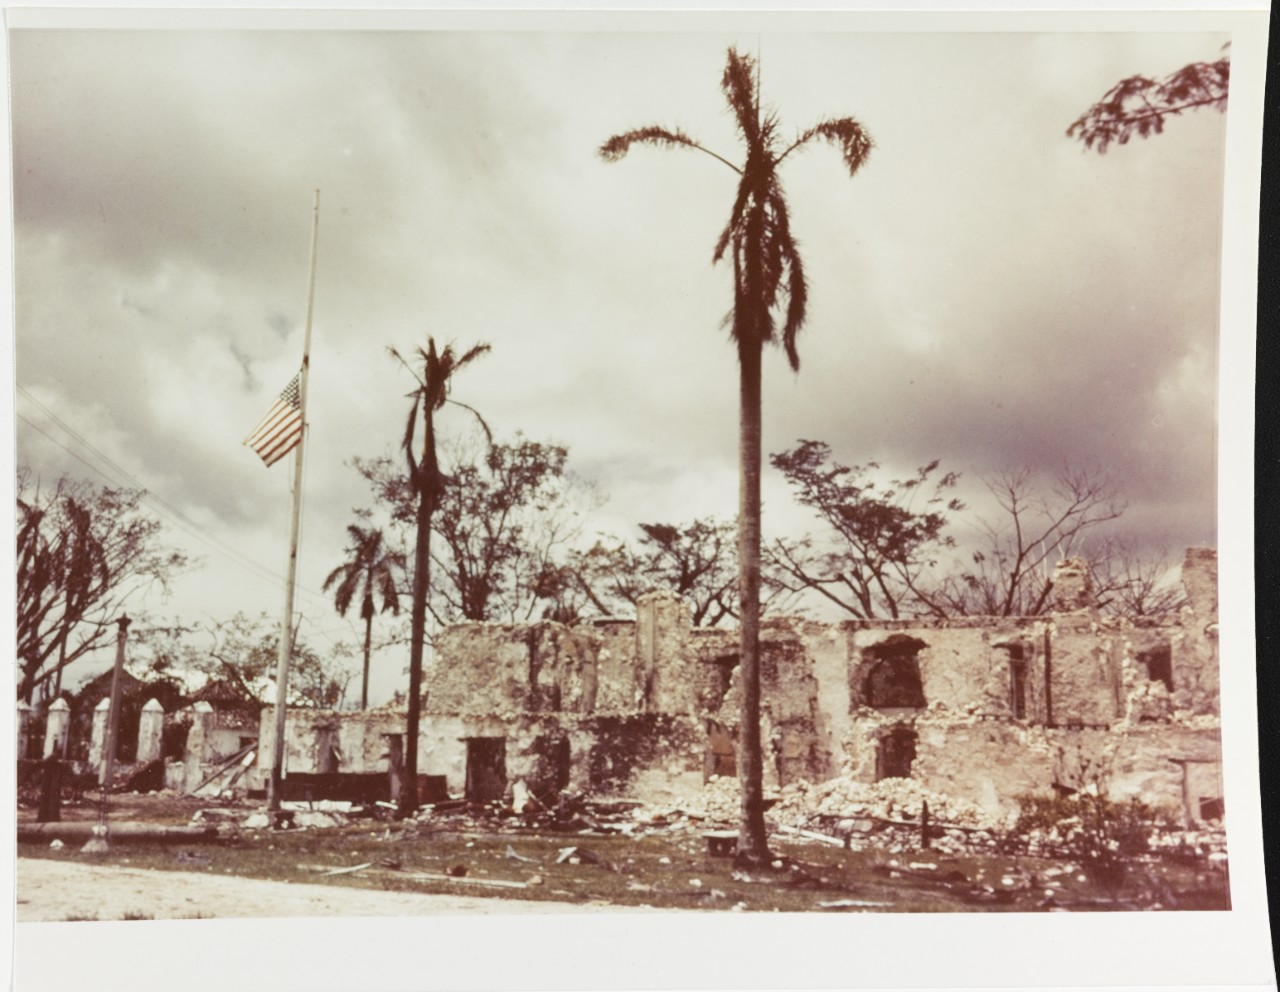 Agana, Guam, U.S. Flag, August 2, 1944